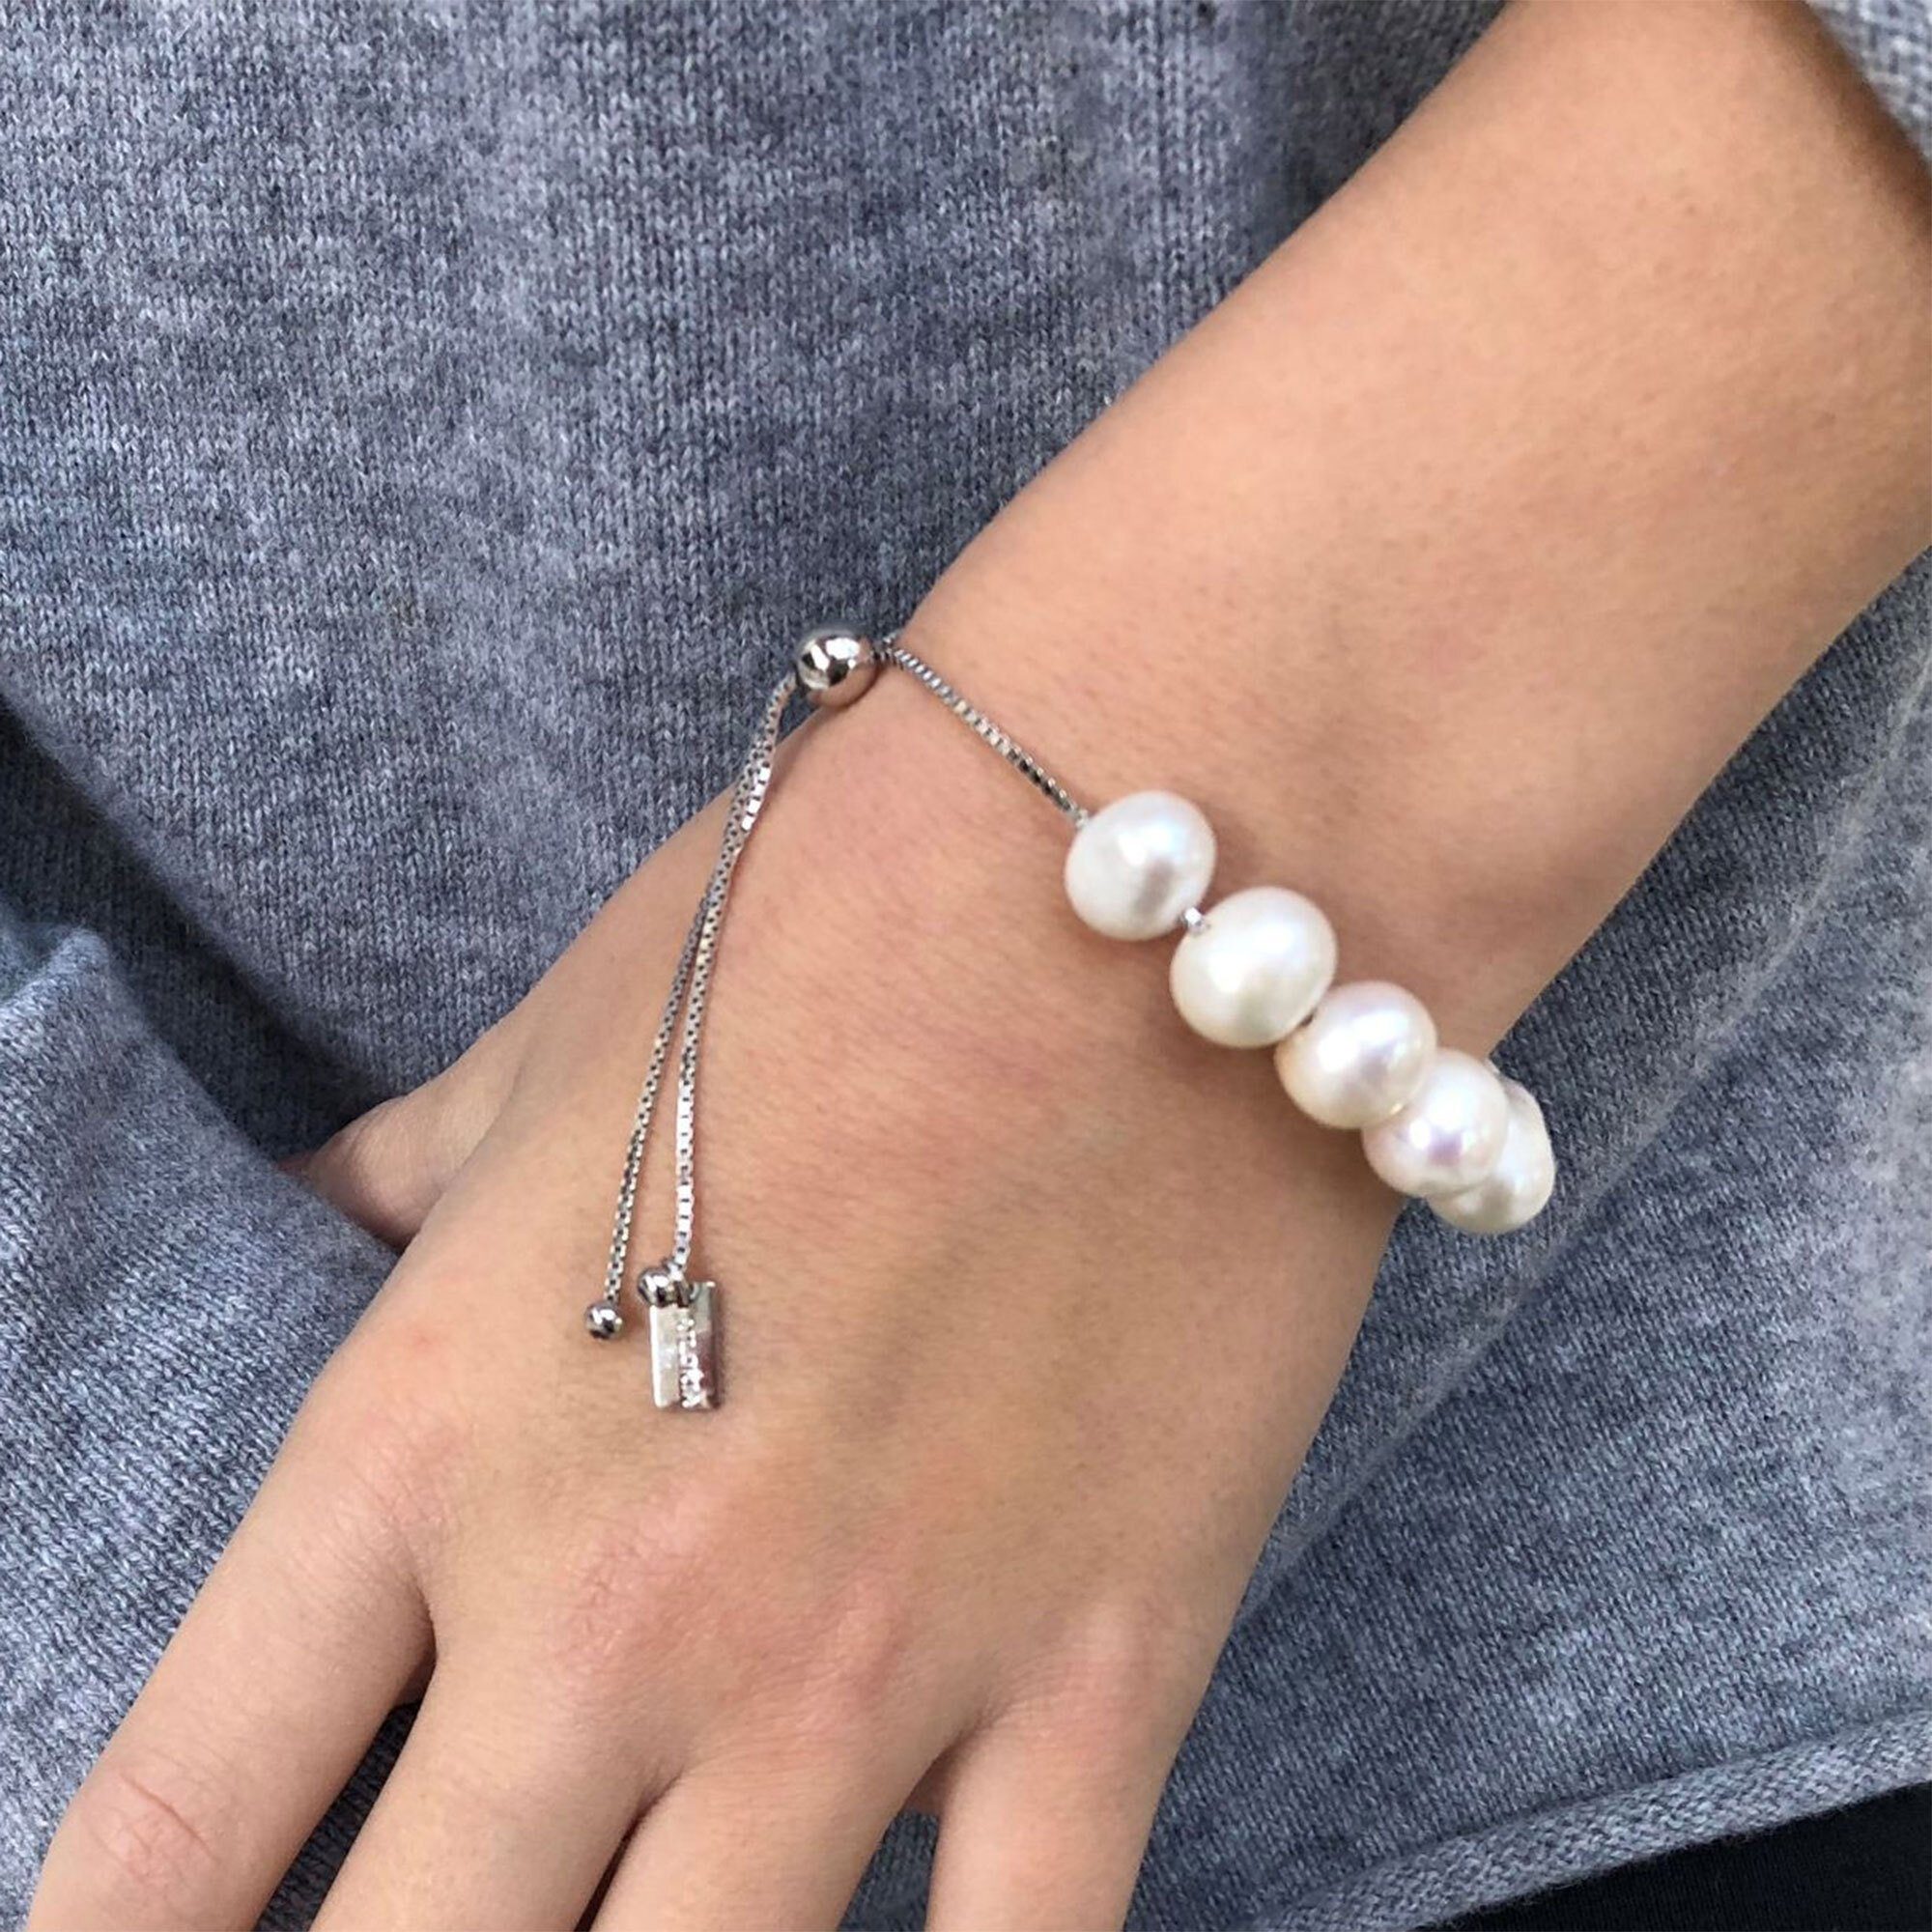 AILORIA MICHIRU Armband armband Perle Armband perle, Silber/weiße silber/weiße